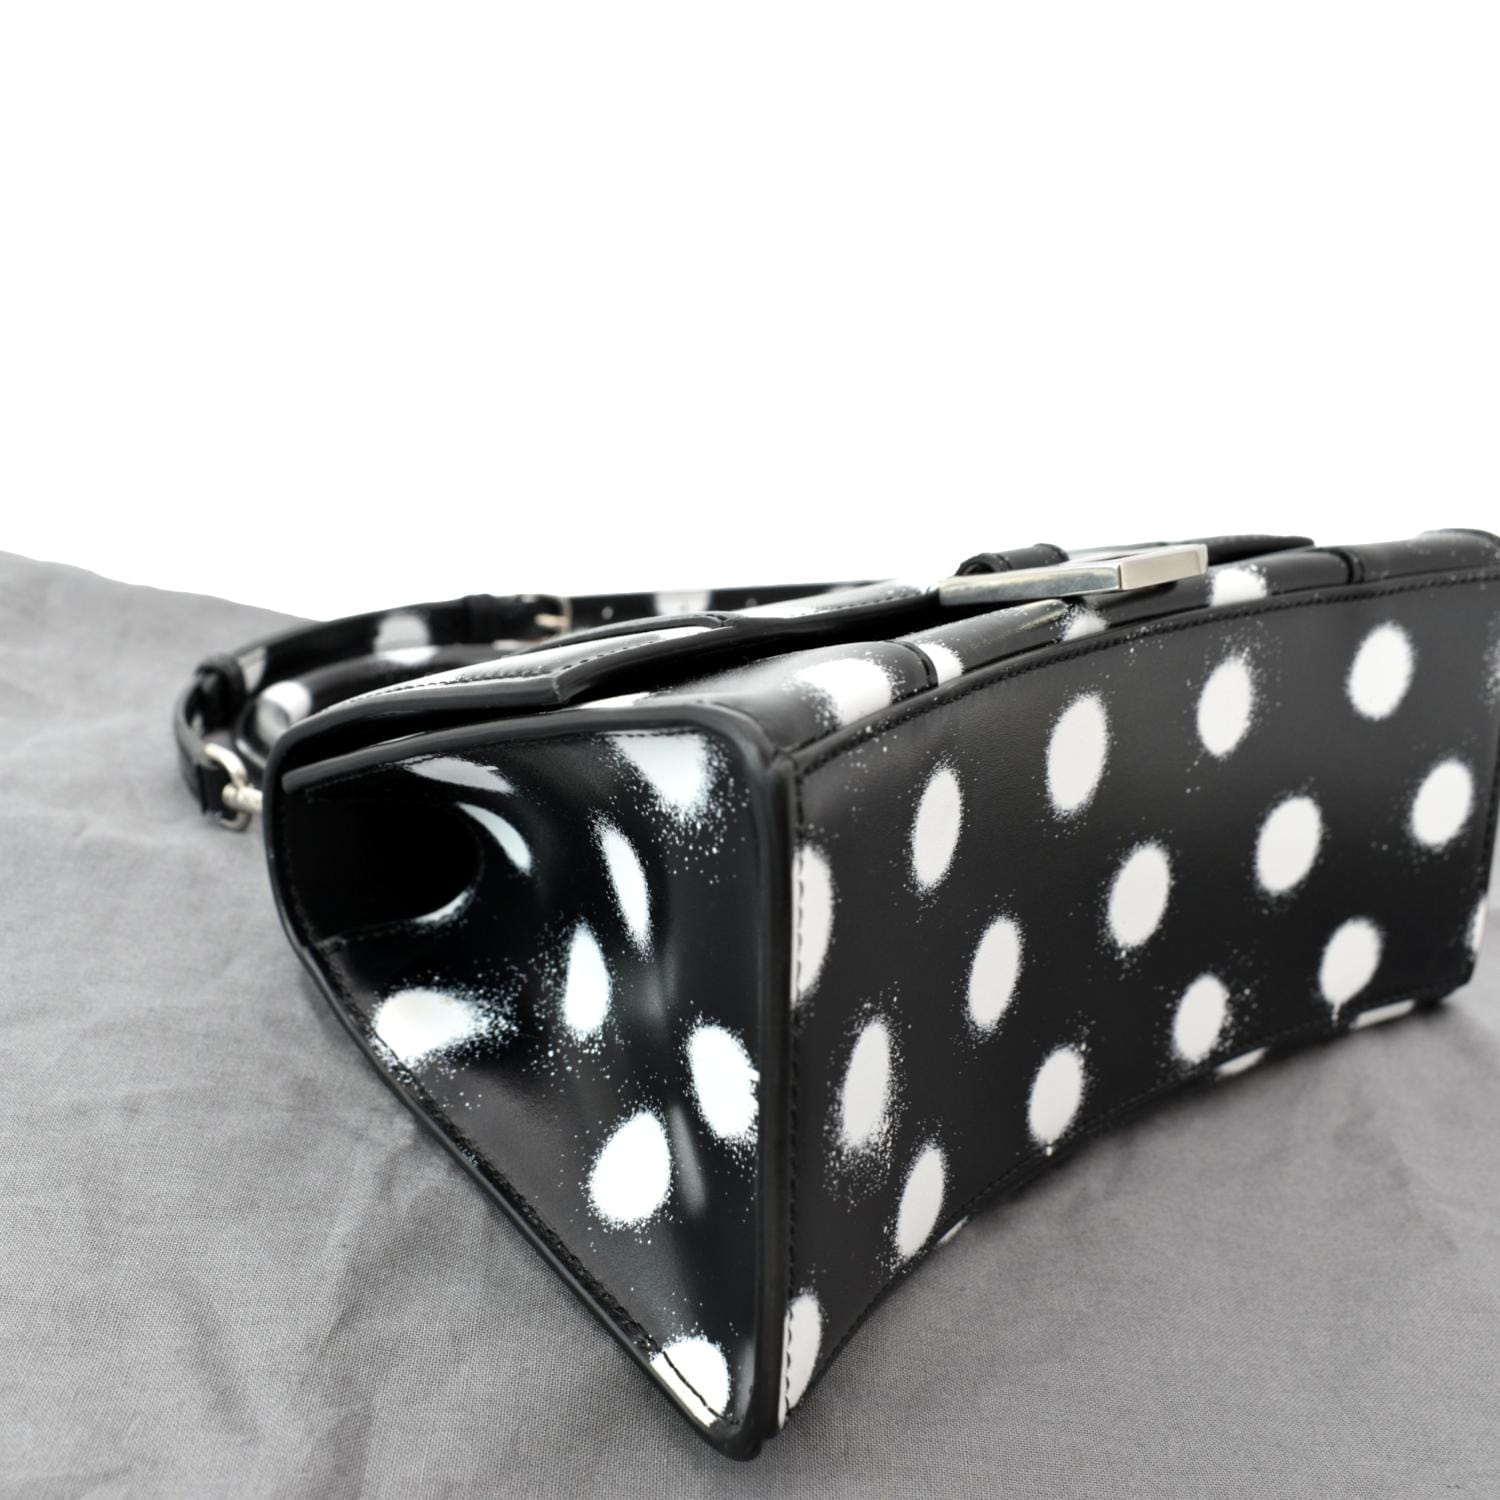 Polka Dot Designer Tote Bag Leather Handbag Large Capacity Womens